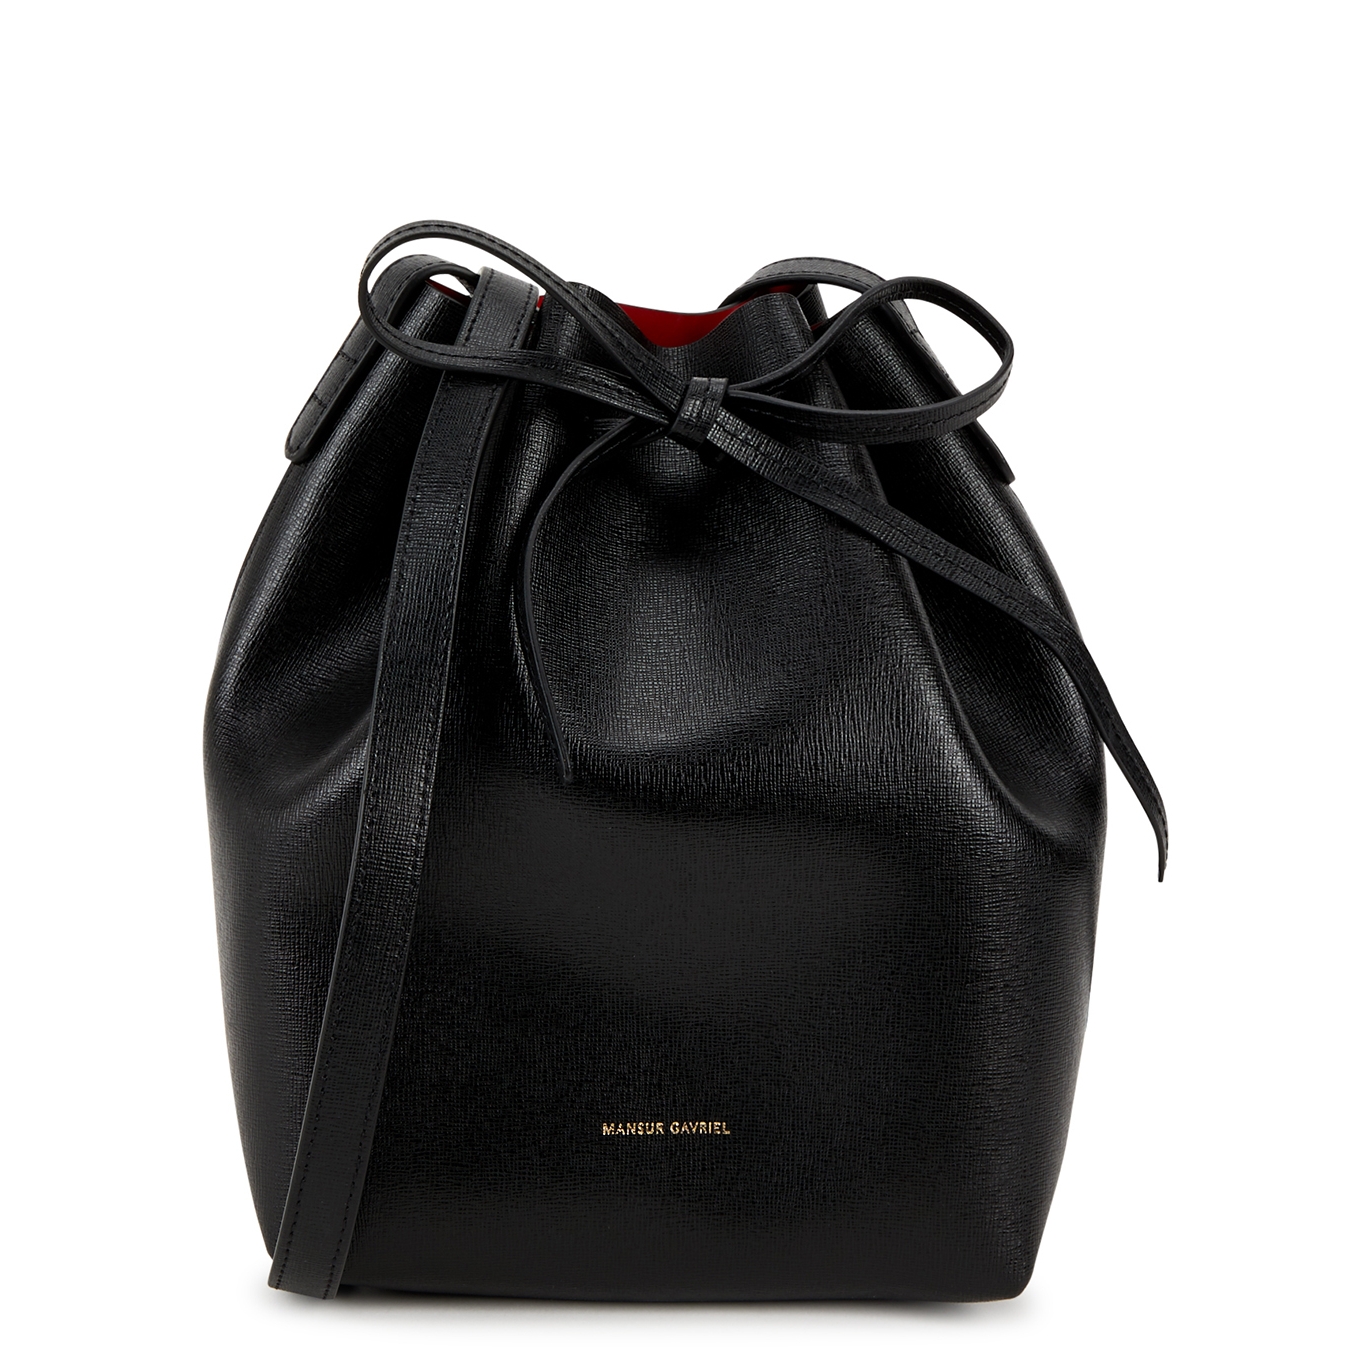 Mansur Gavriel, Bags, Mansur Gavriel Bucket Bag Black Saffiano Leather